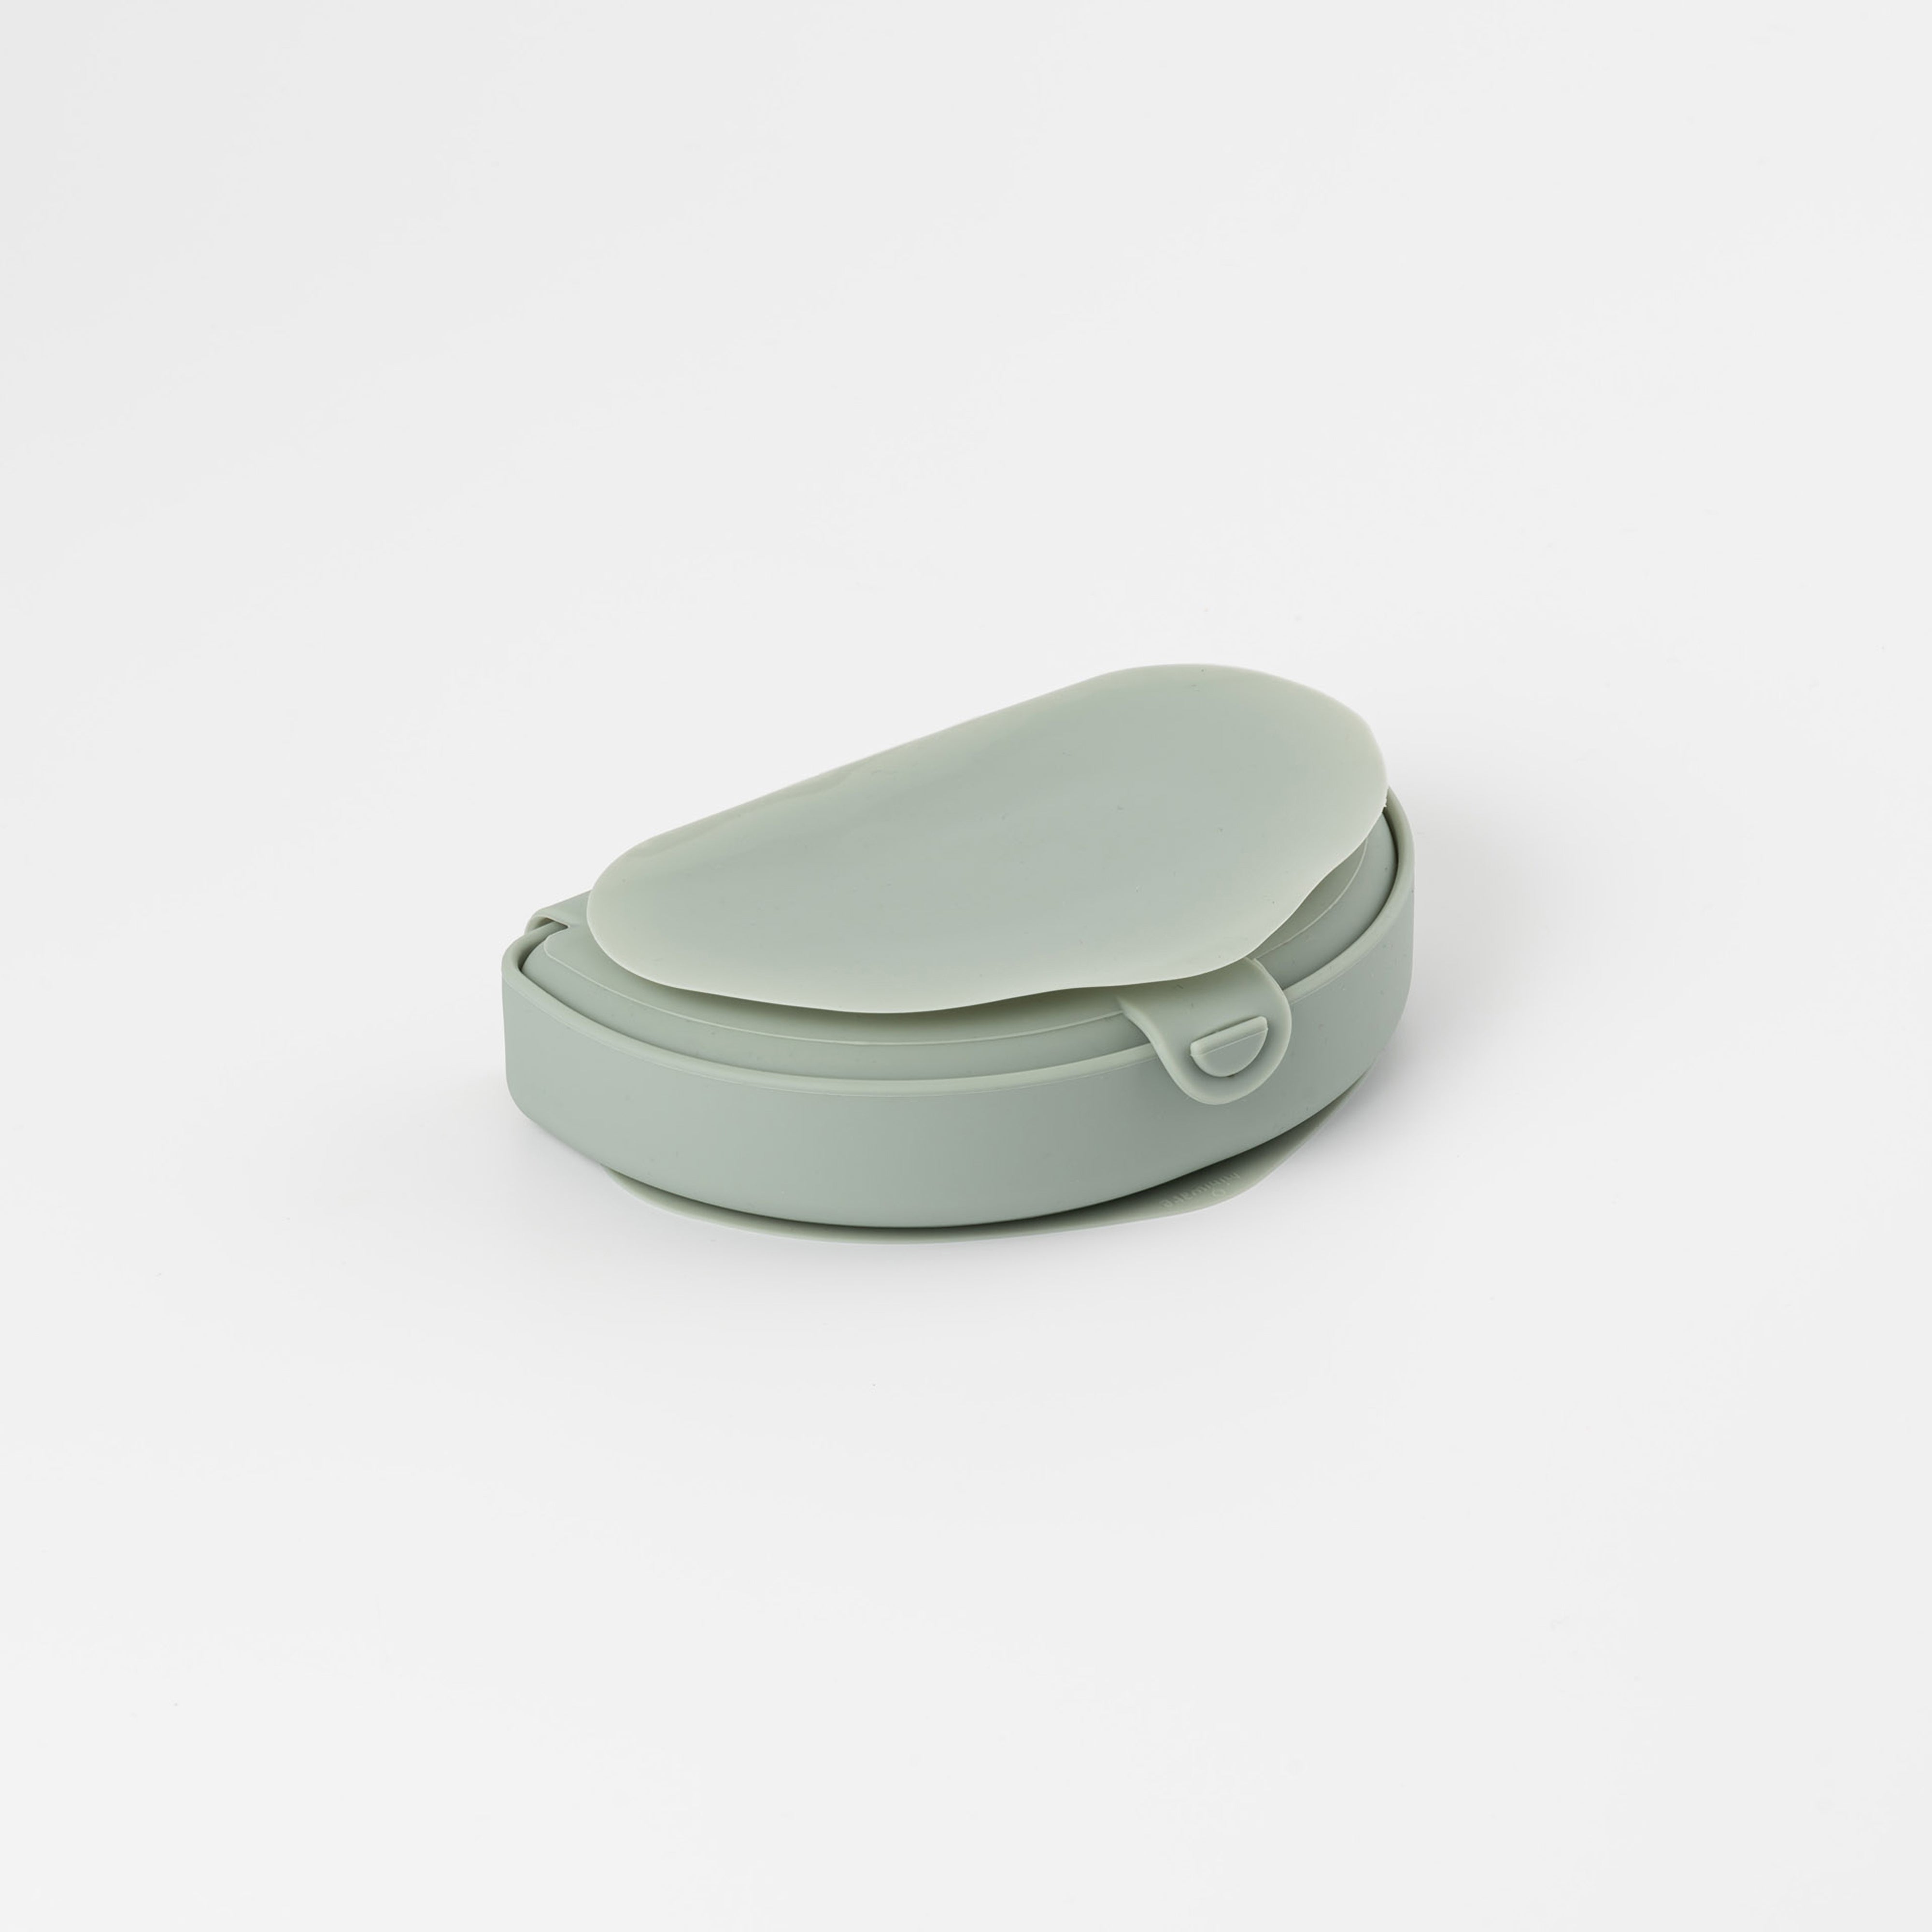 miniware-silifold-folding-silicone-lunch-box-sage-green- (6)